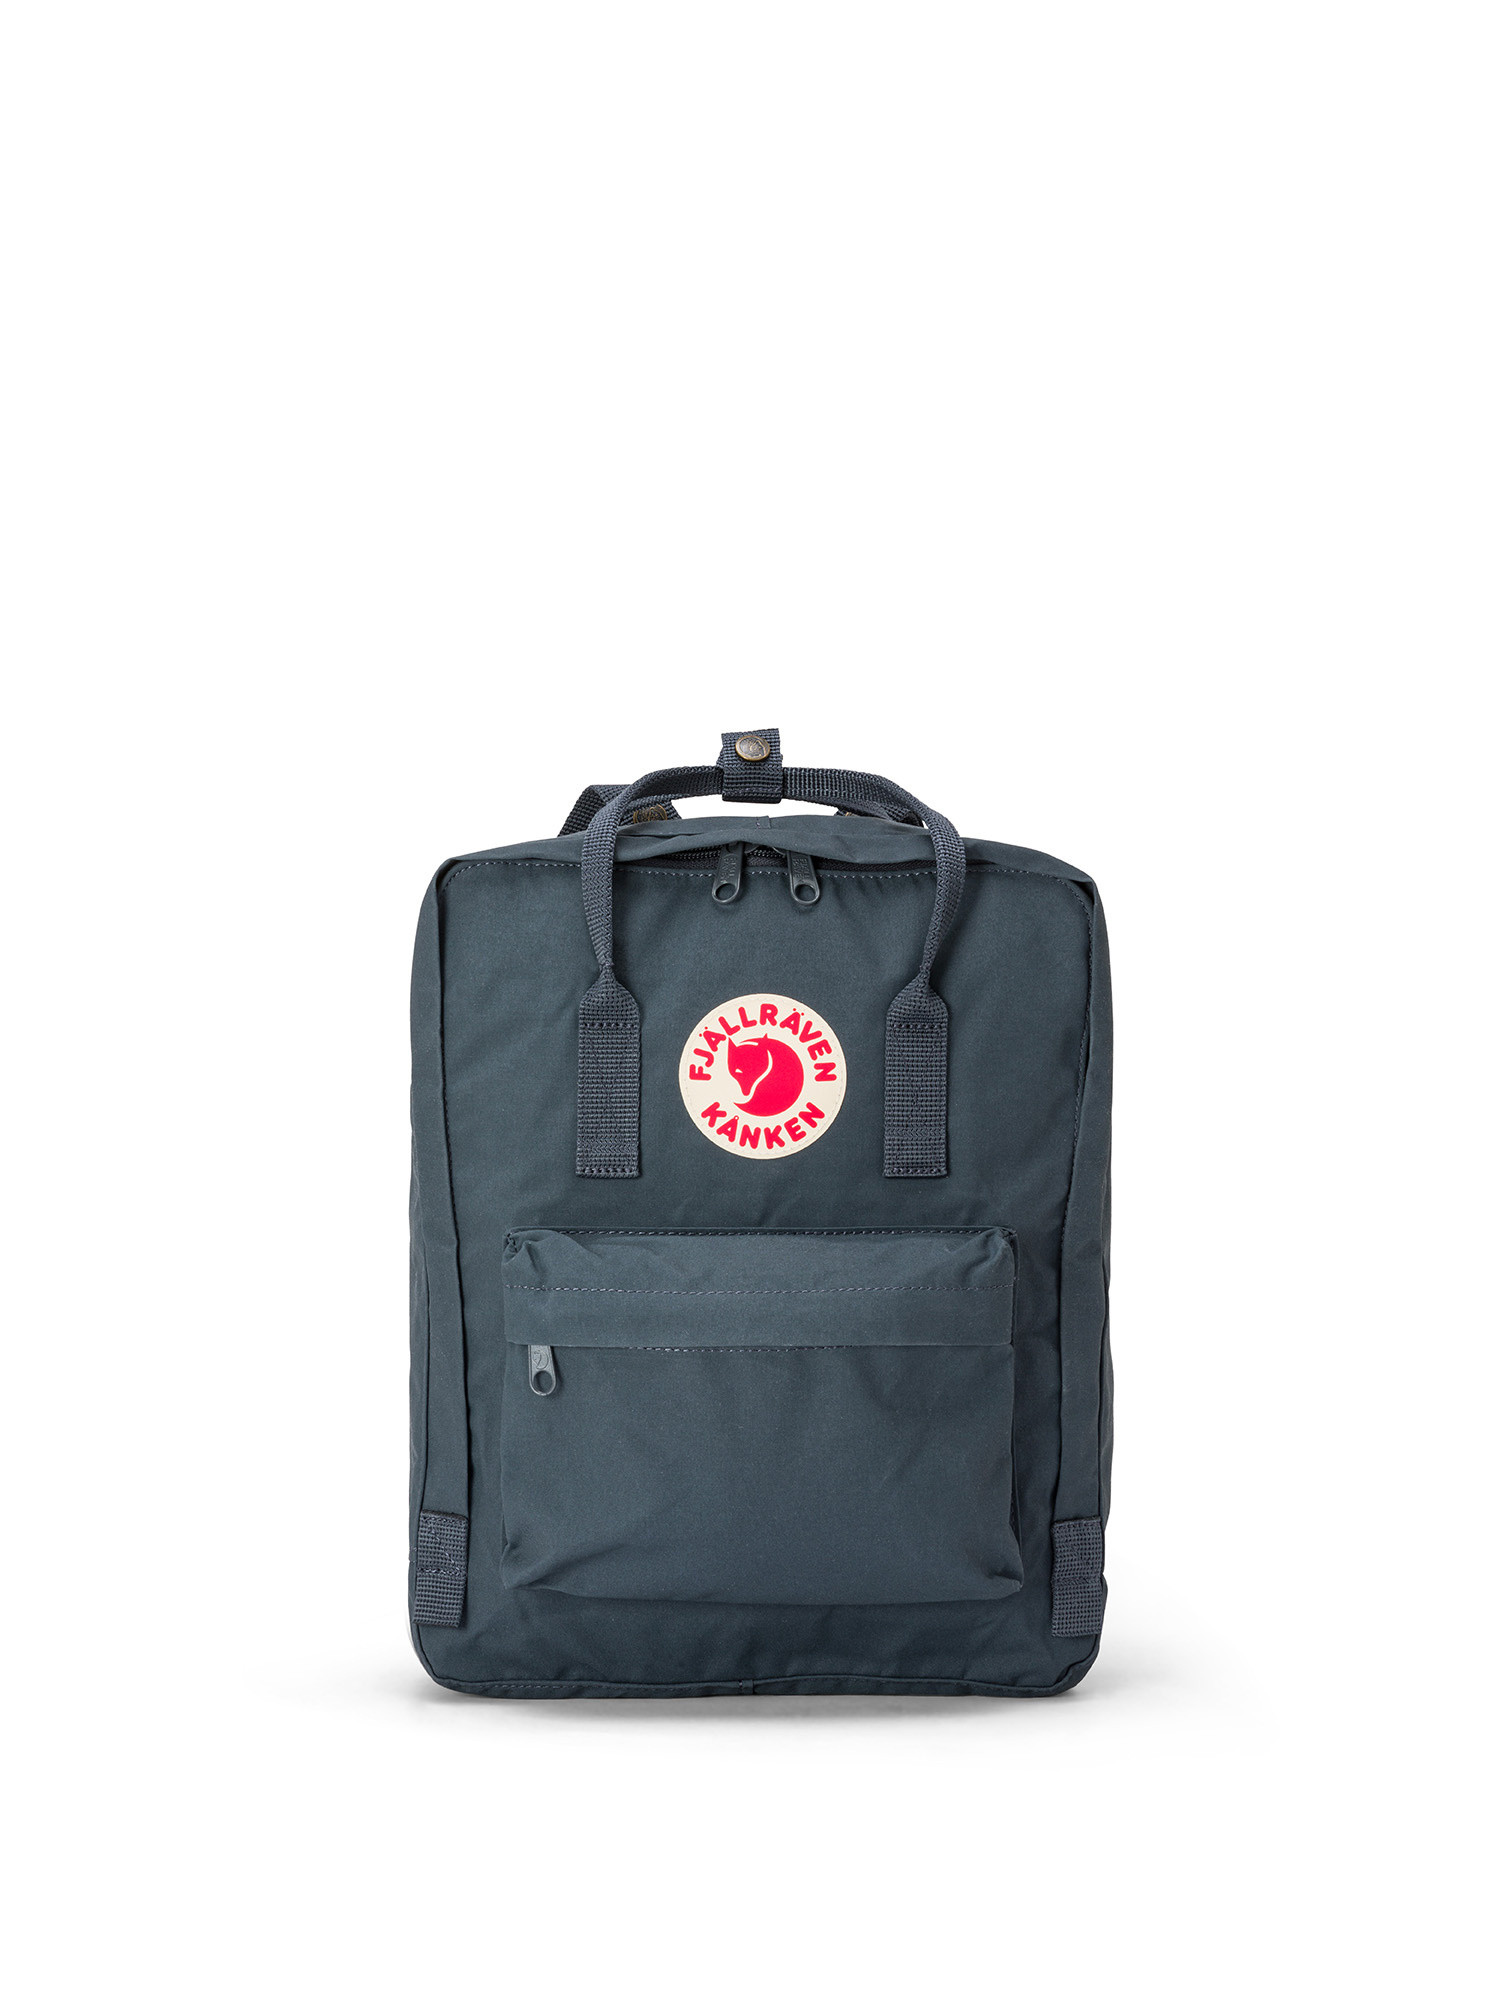 Fjallraven - Classic Kånken backpack in durable Vinylon fabric, Dark Grey, large image number 0